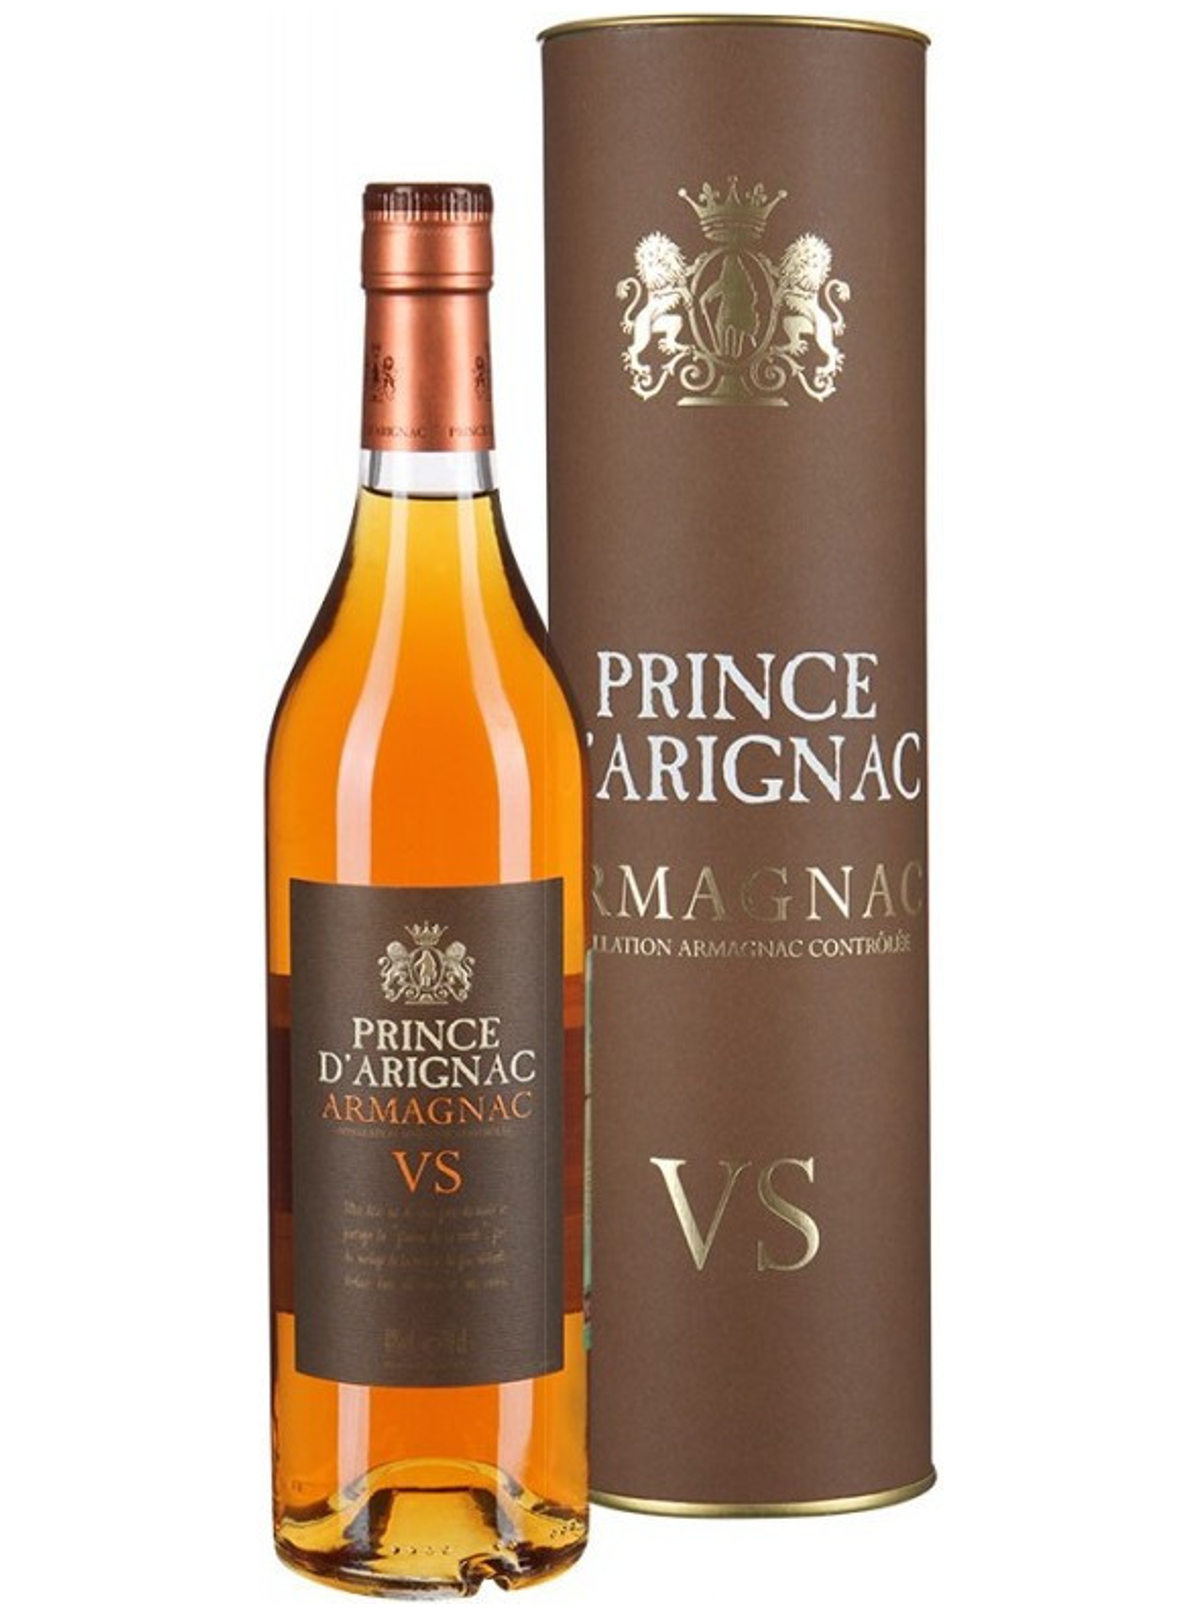 Prince Armagnac vs. Арманьяк принц д'Ариньяк Хо. Арманьяк Prince d'Arignac vs. Prince Armagnac vs 0.7. Арманьяк 0.7 цена